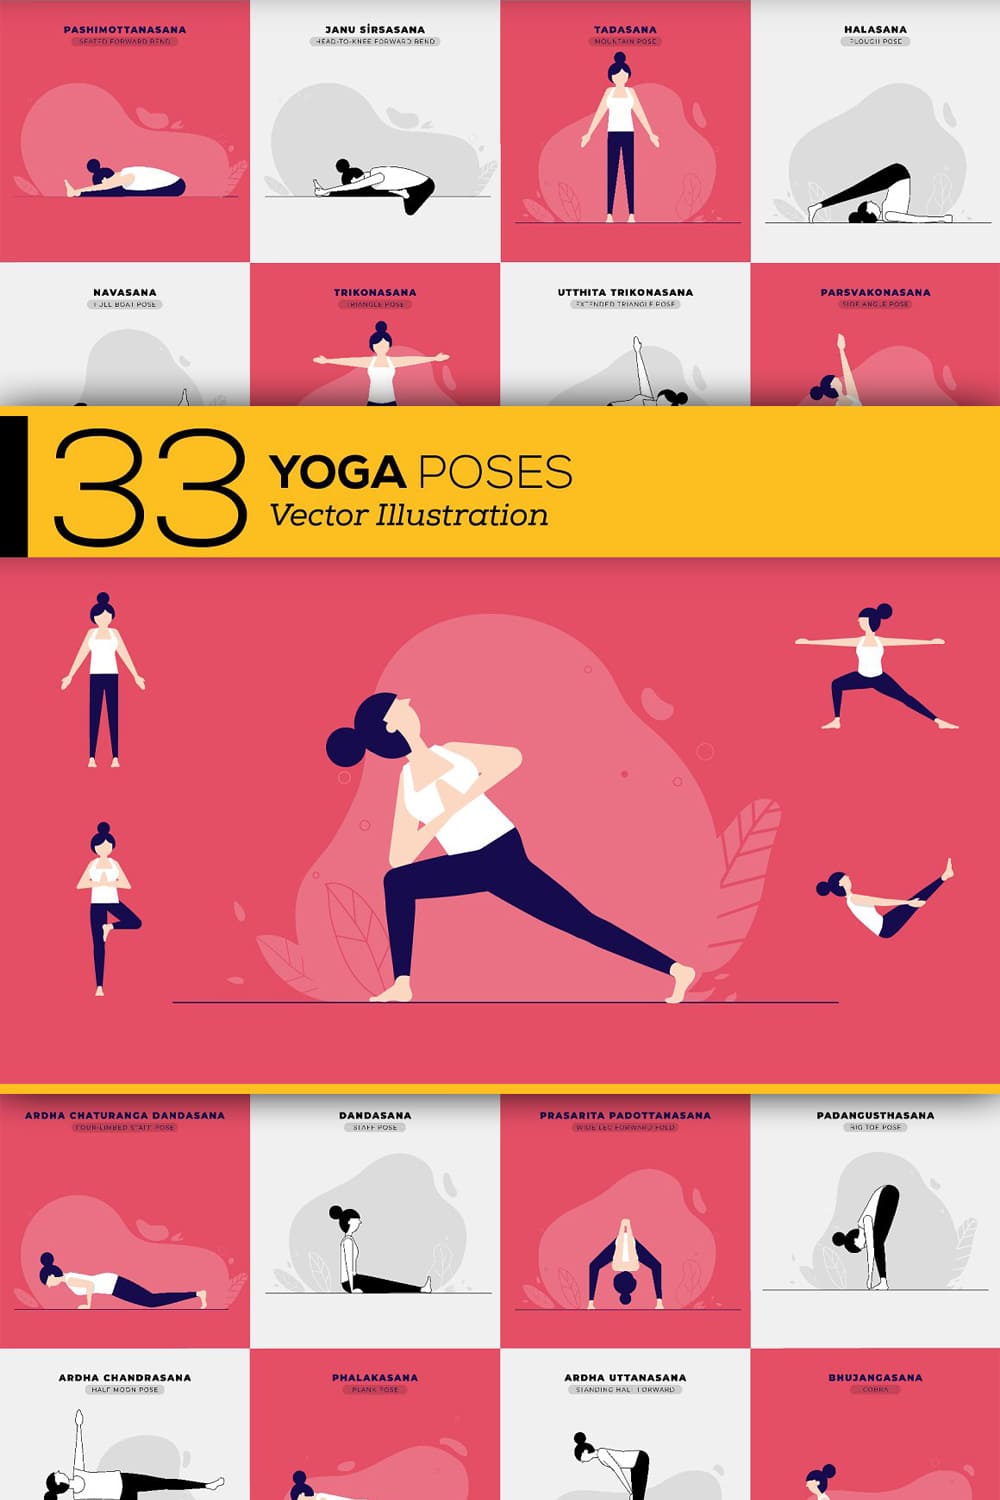 33 yoga poses illustration - pinterest image preview.